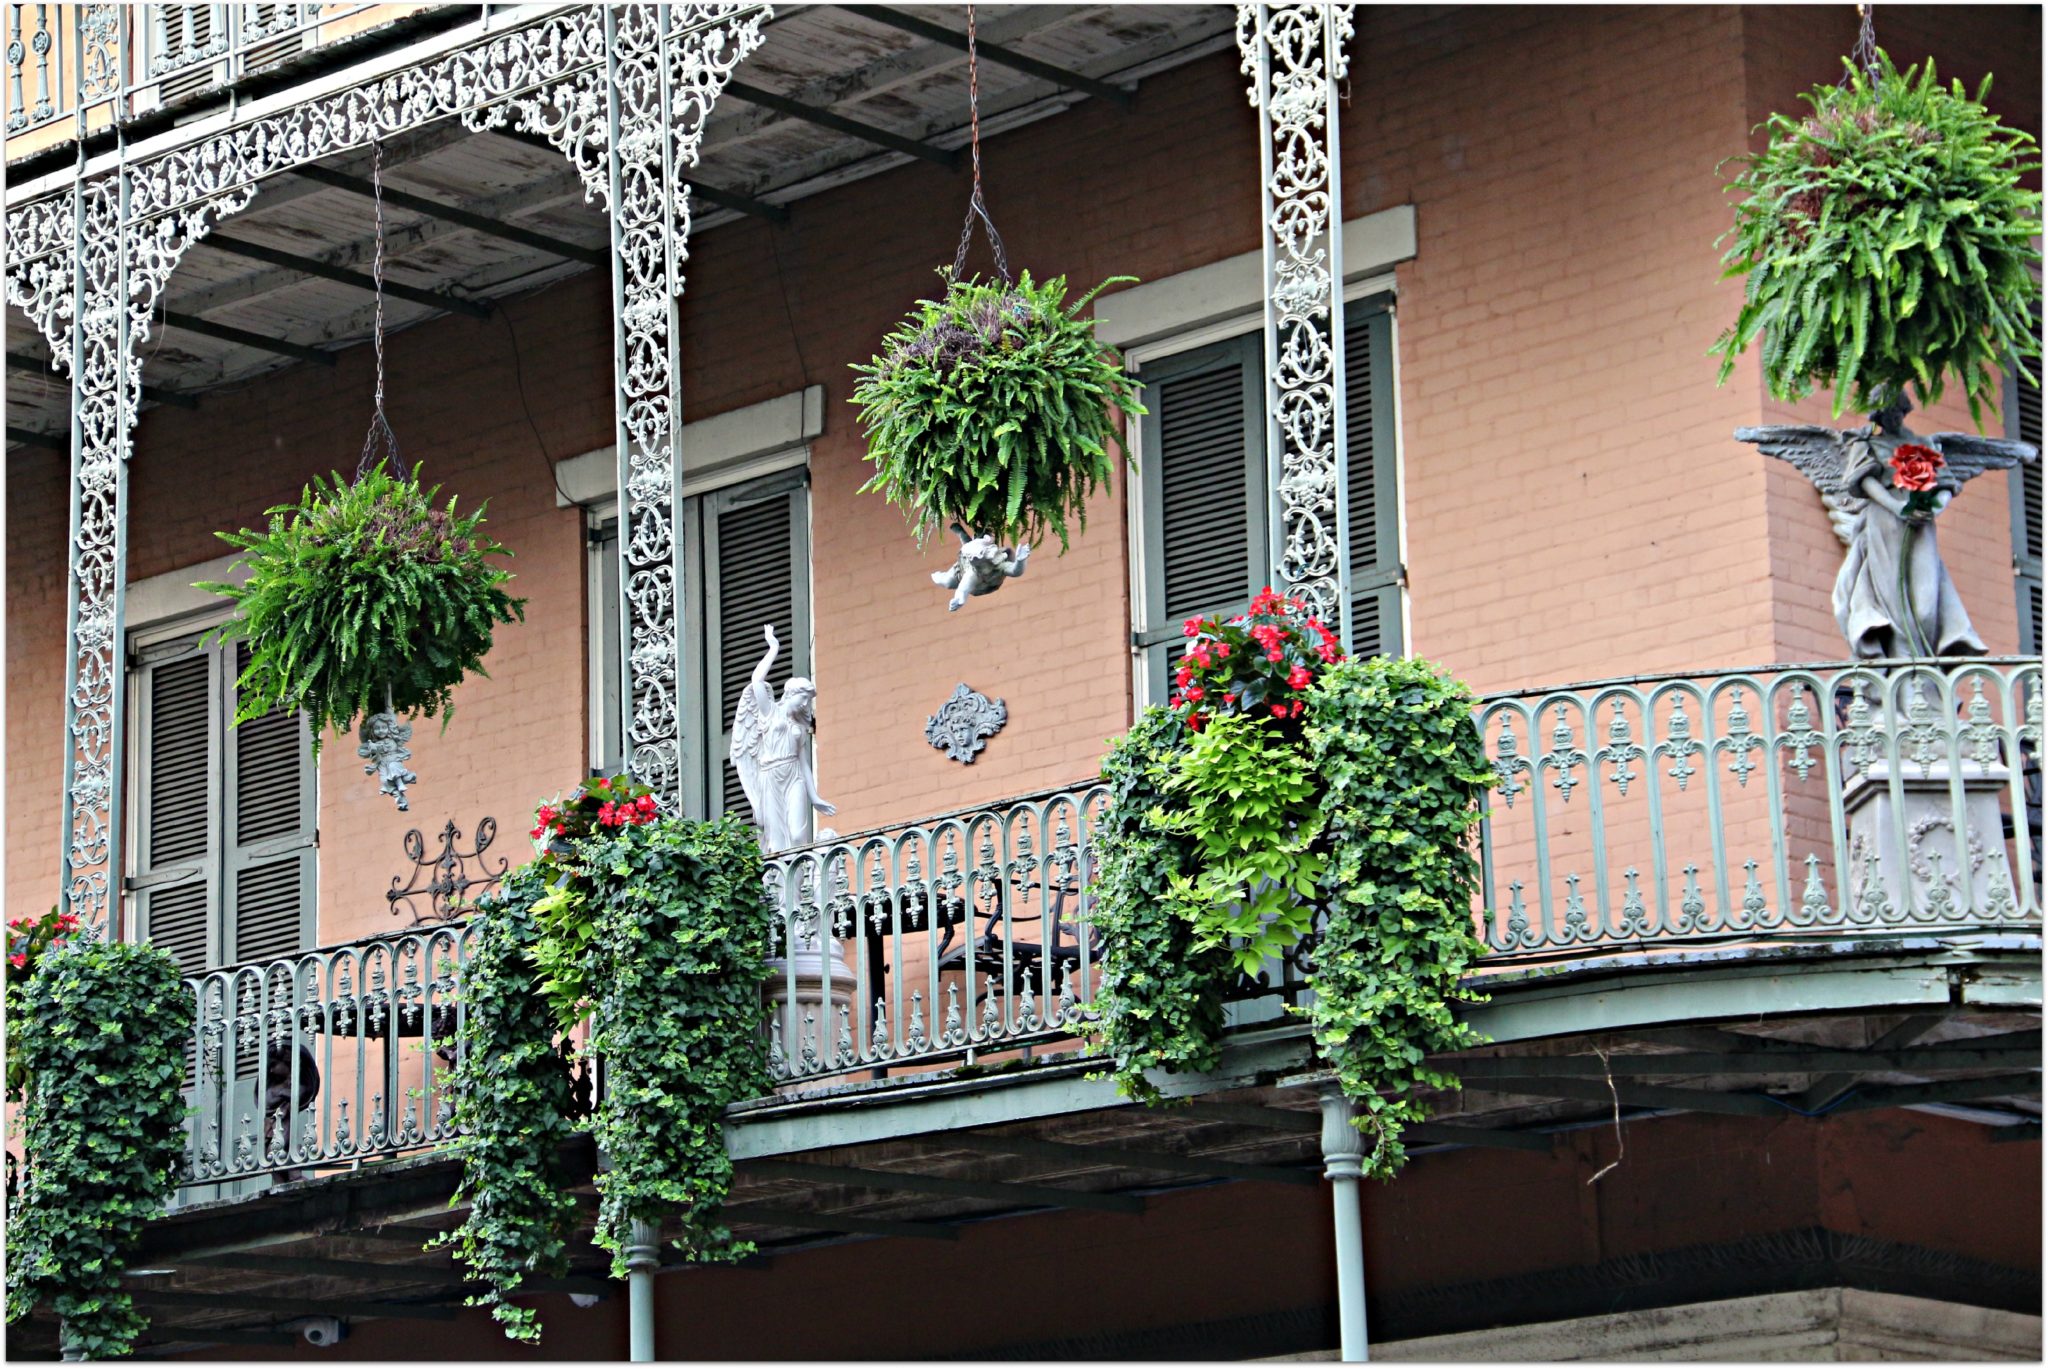 Balconies on Royal Street